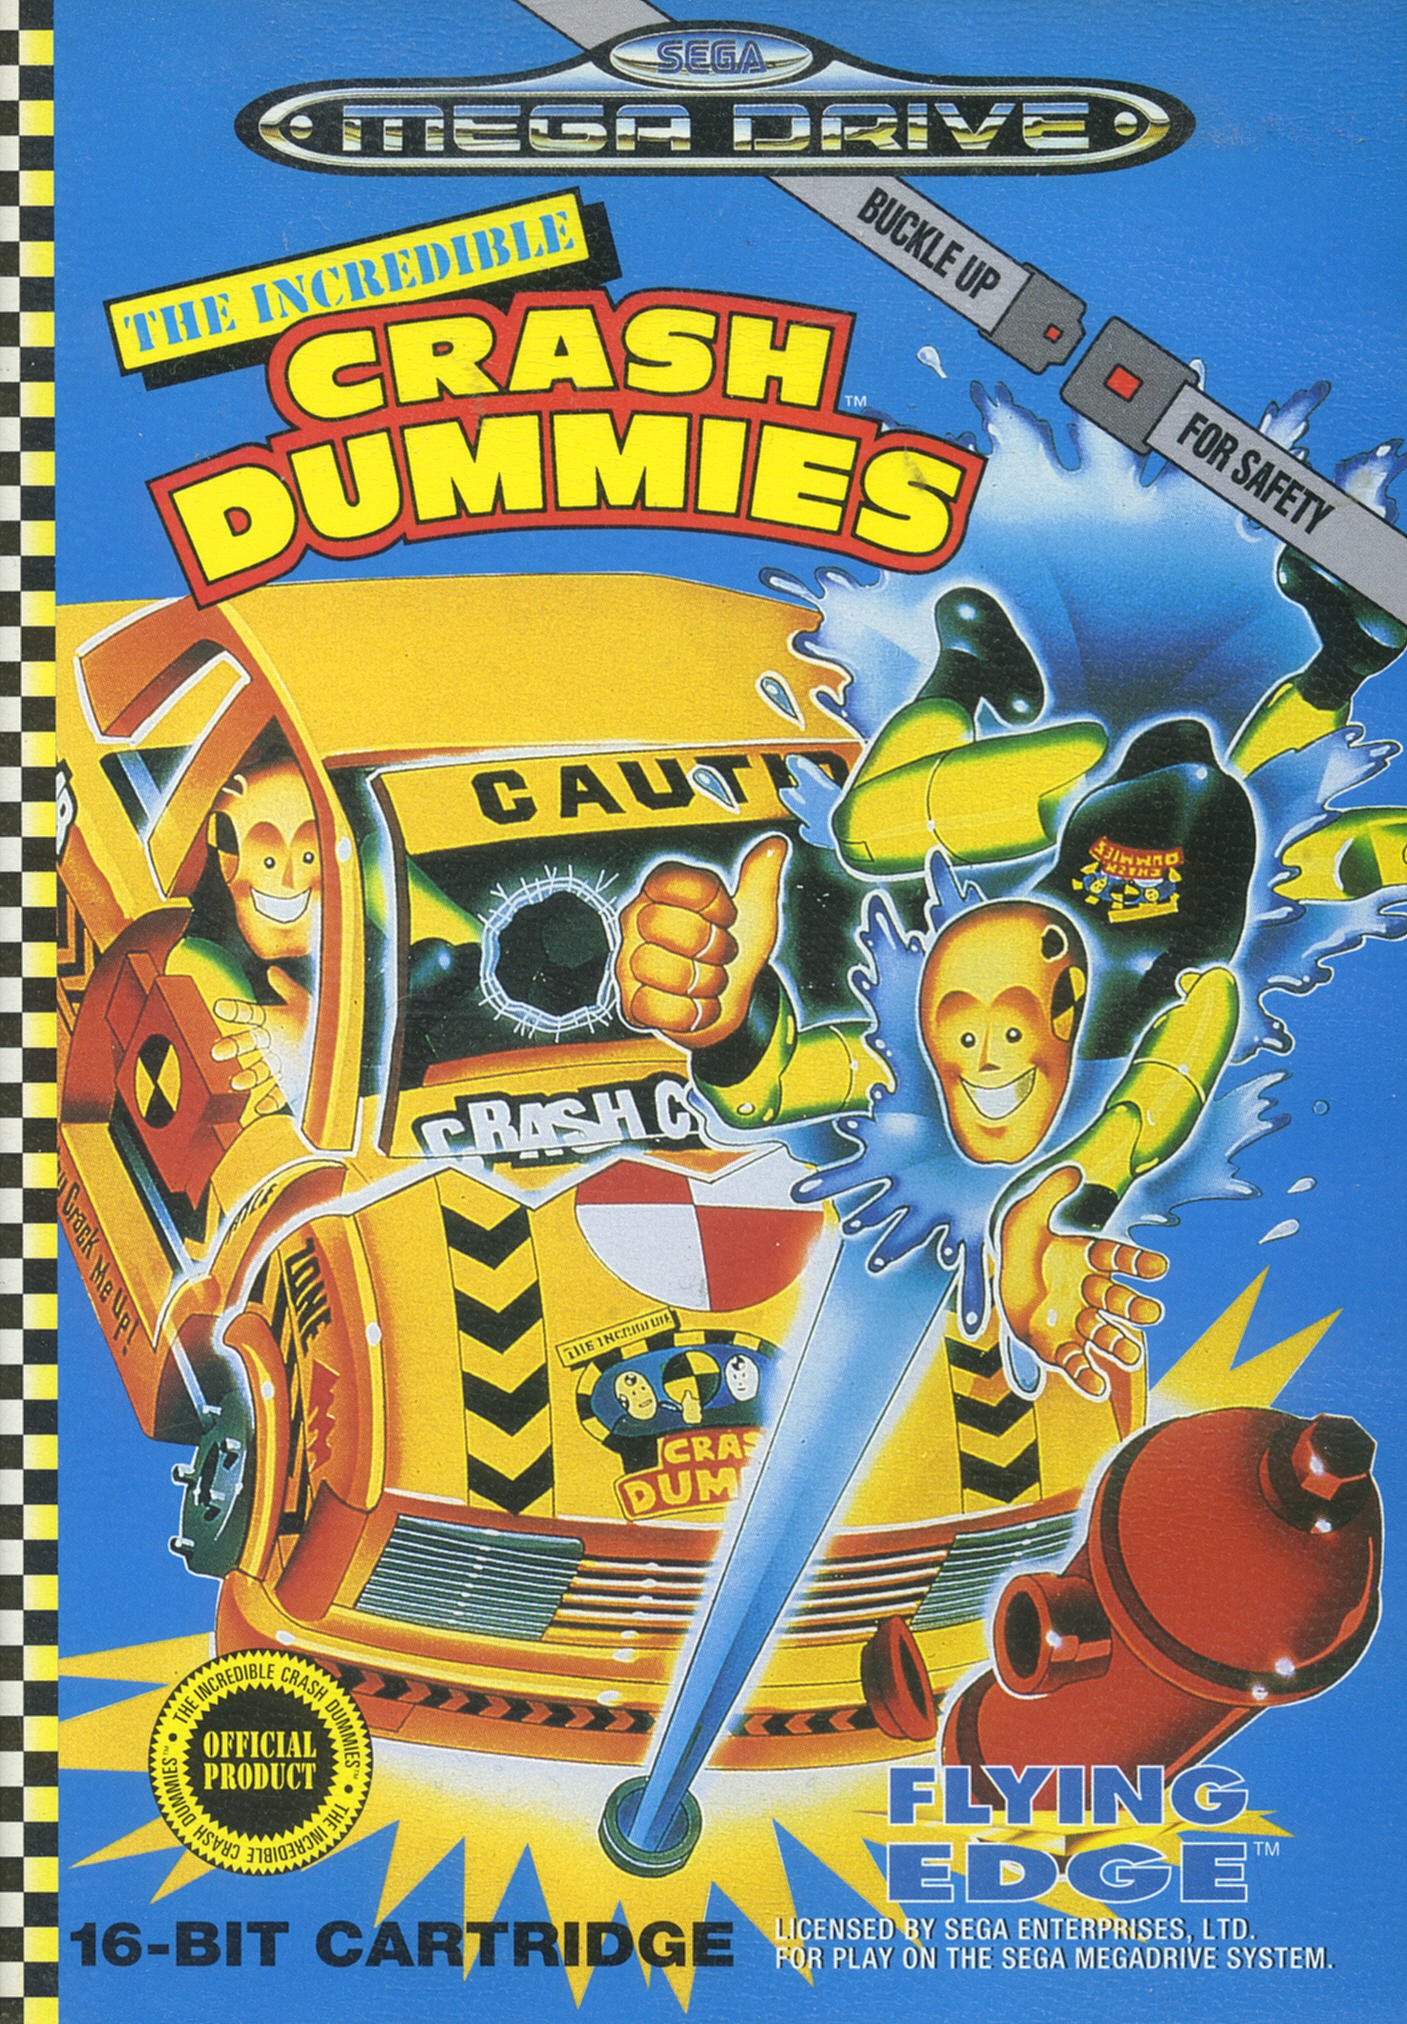 Image of The Incredible Crash Dummies